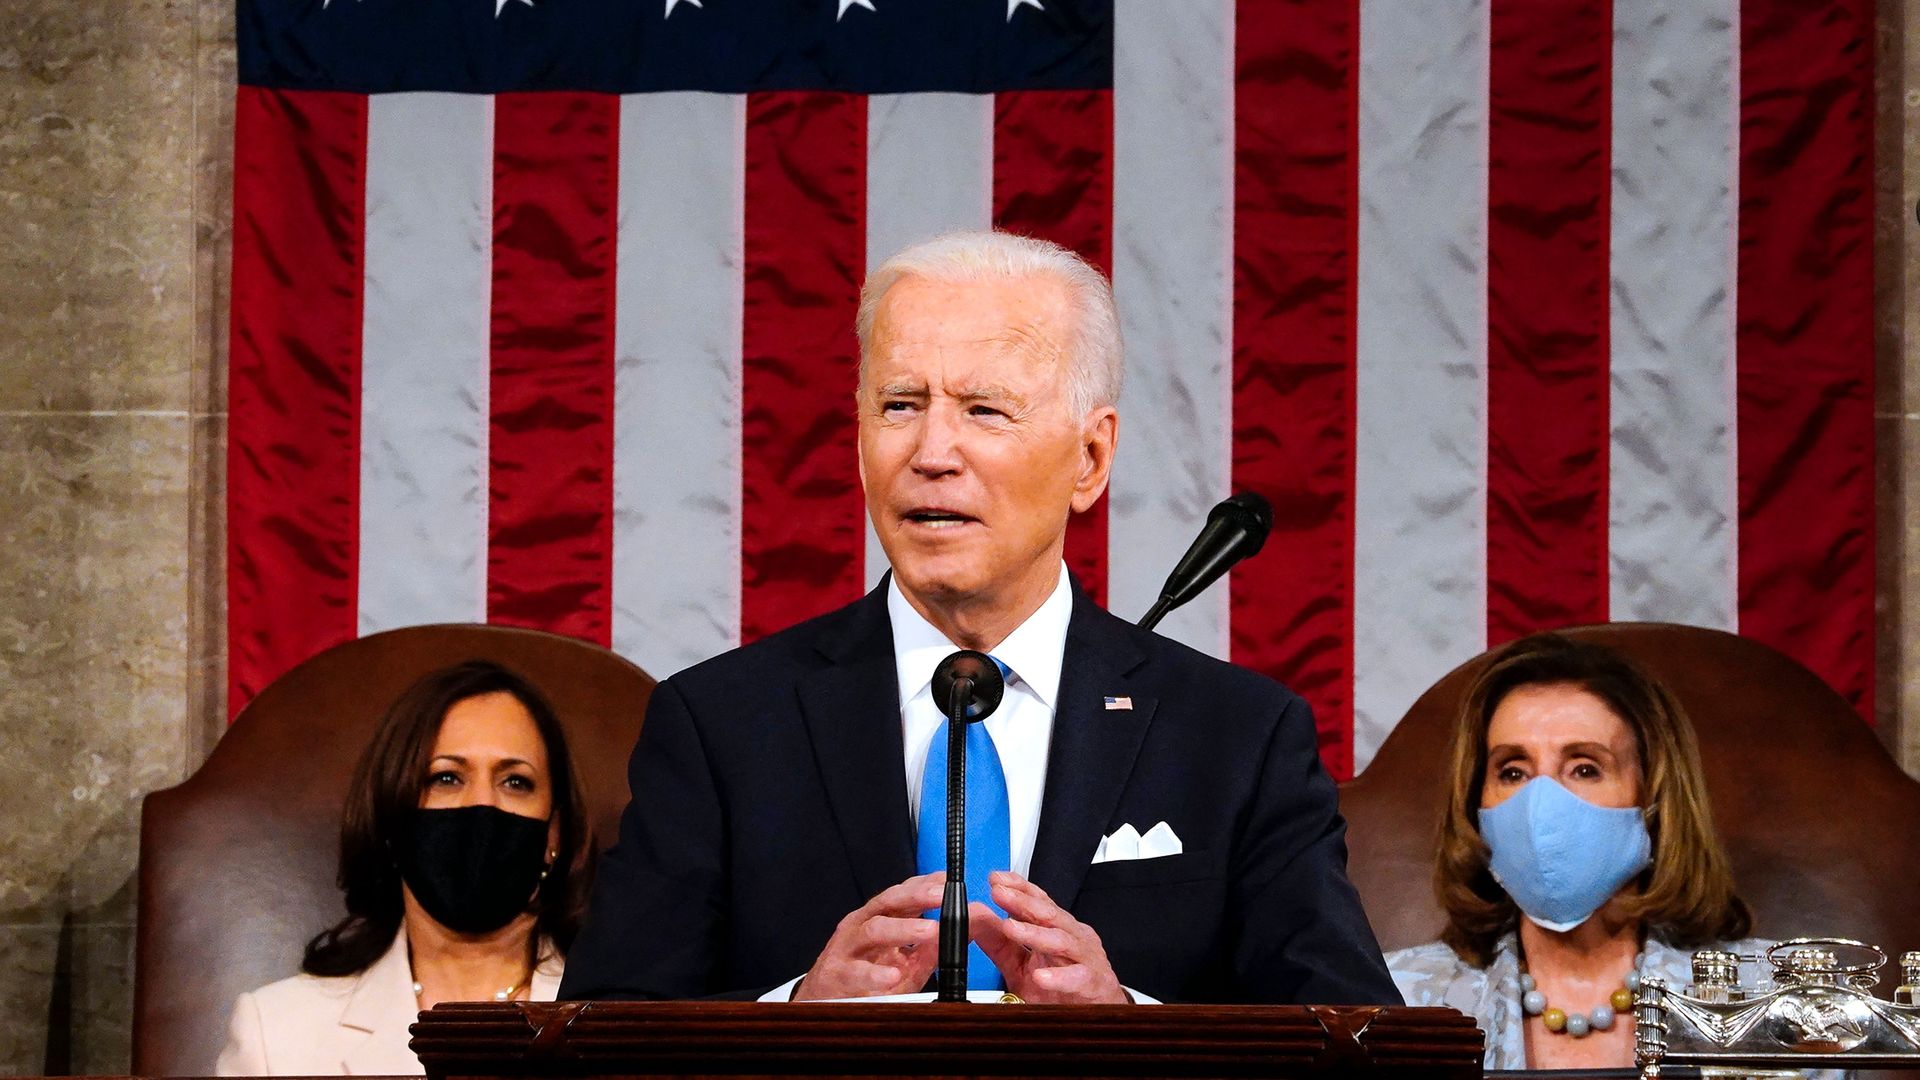 President Biden addresses Congress